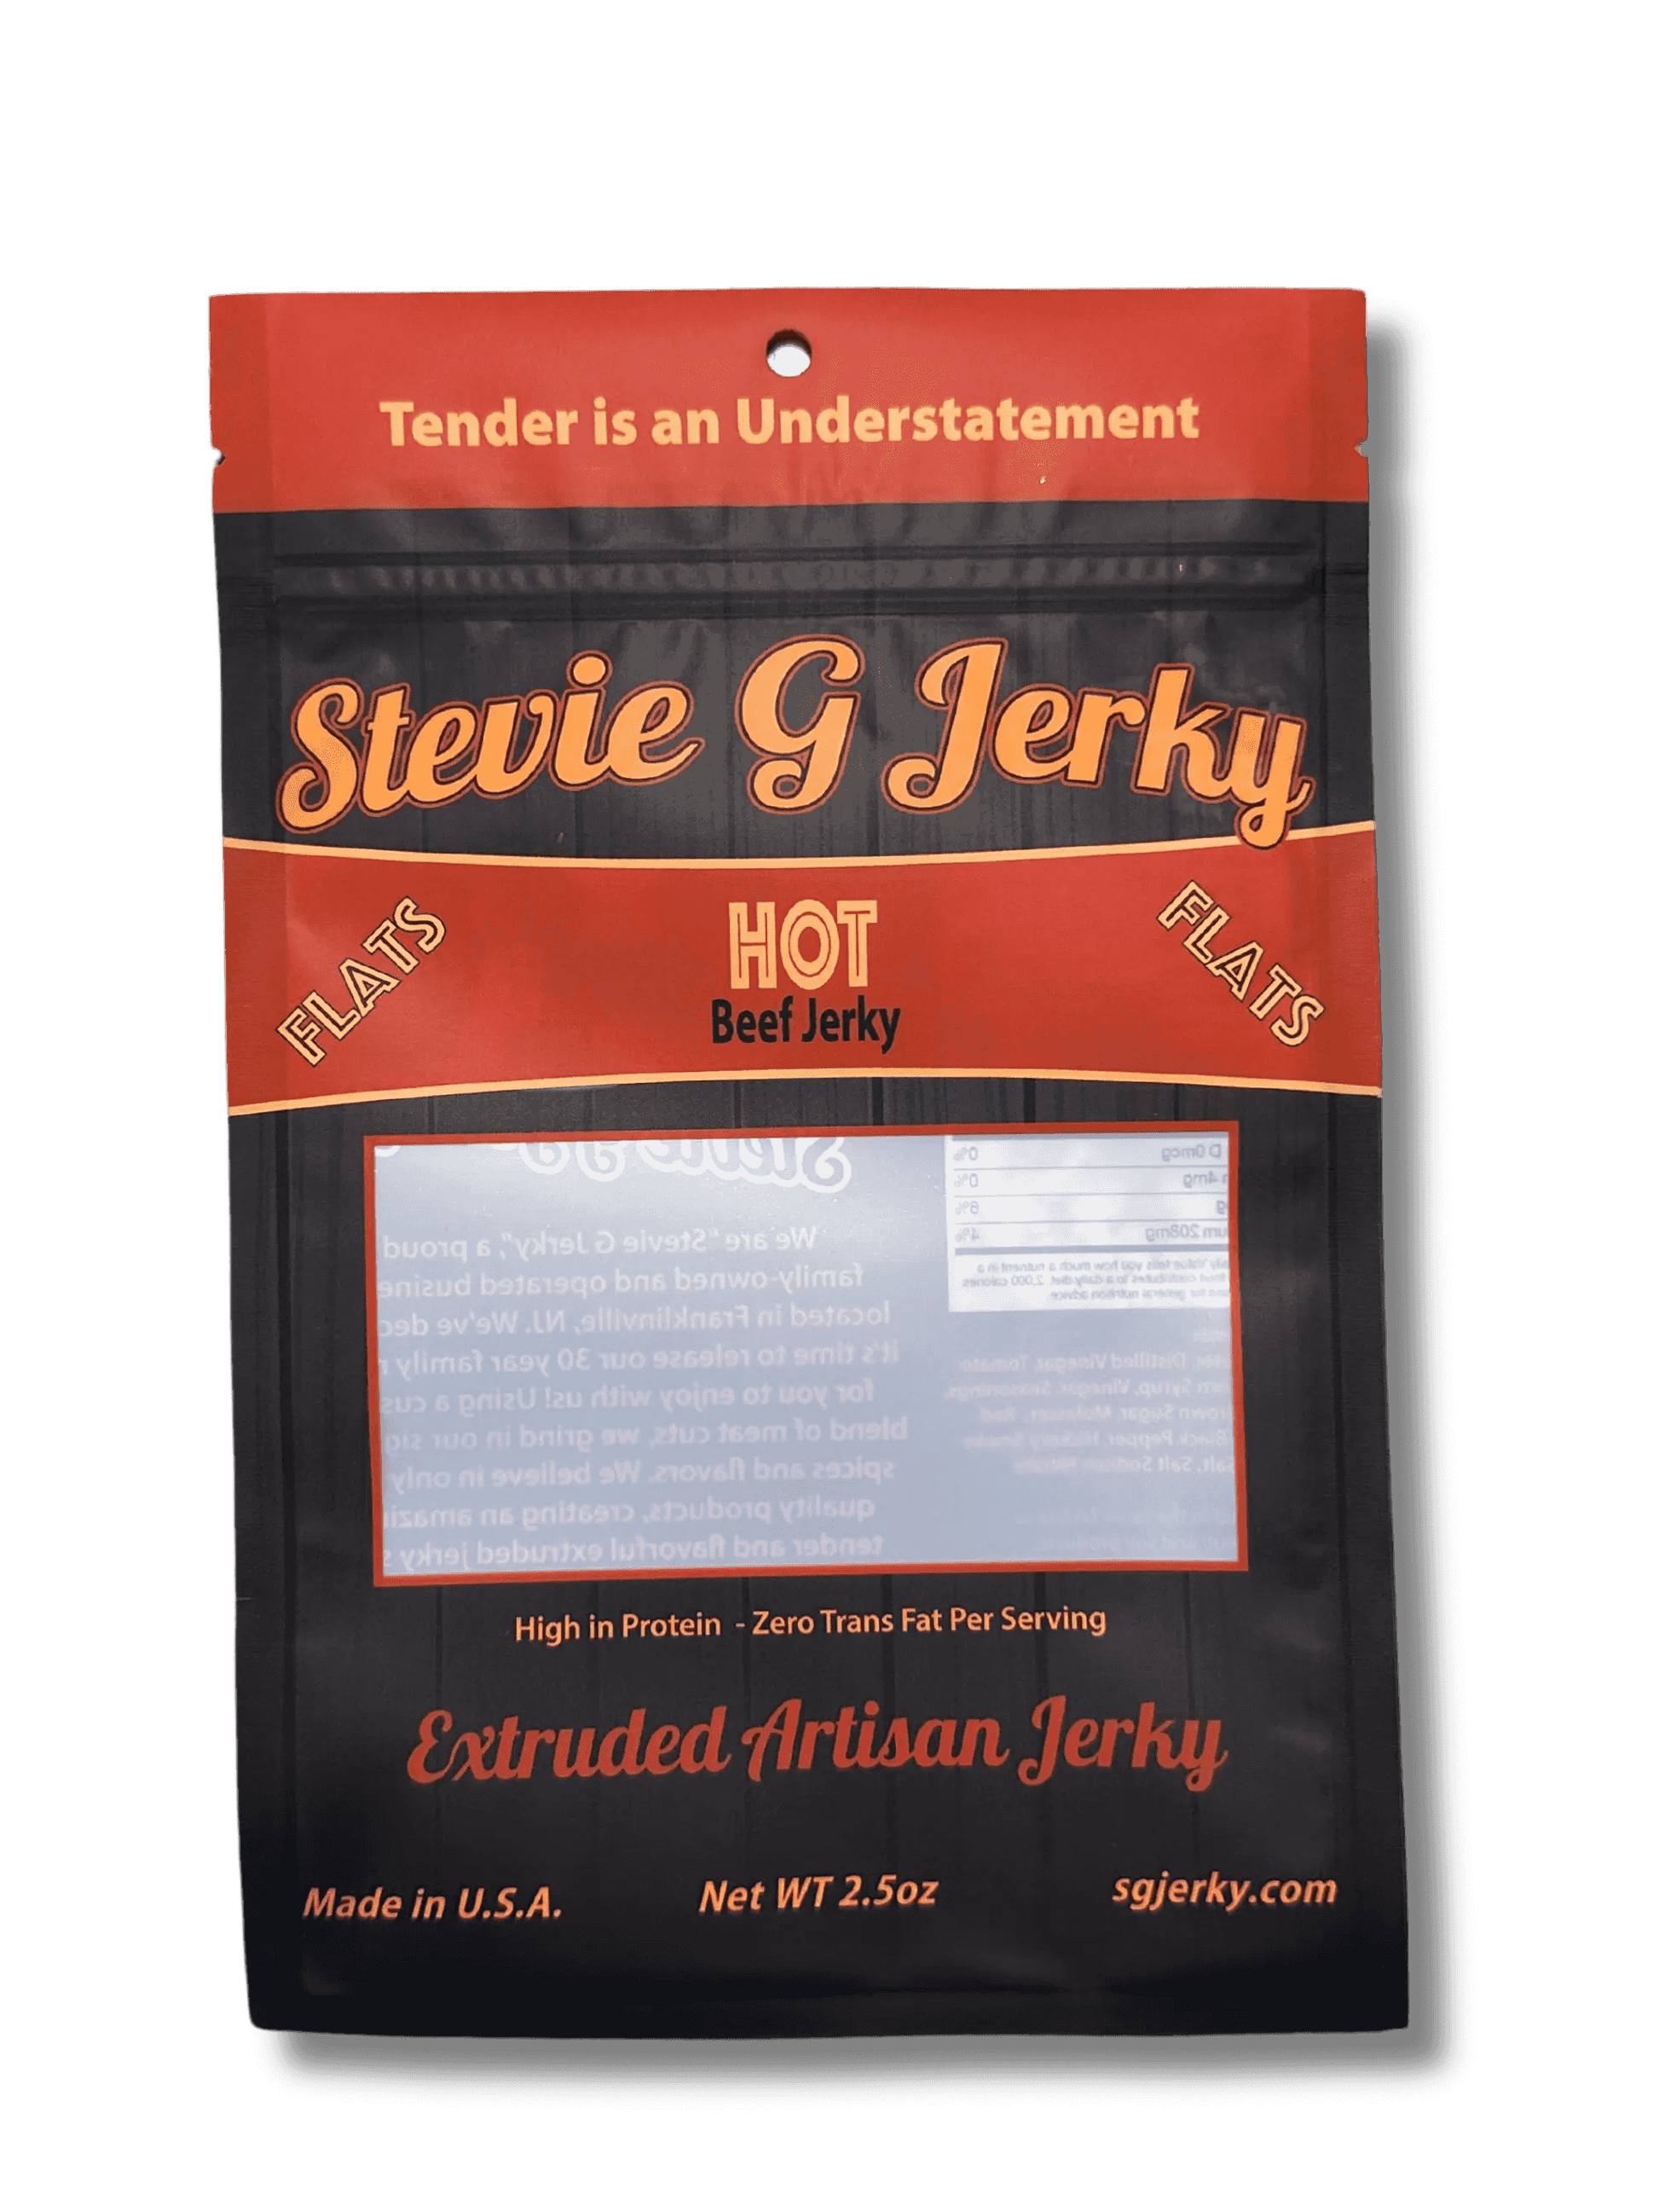 Steve G's hot sticks beef jerky